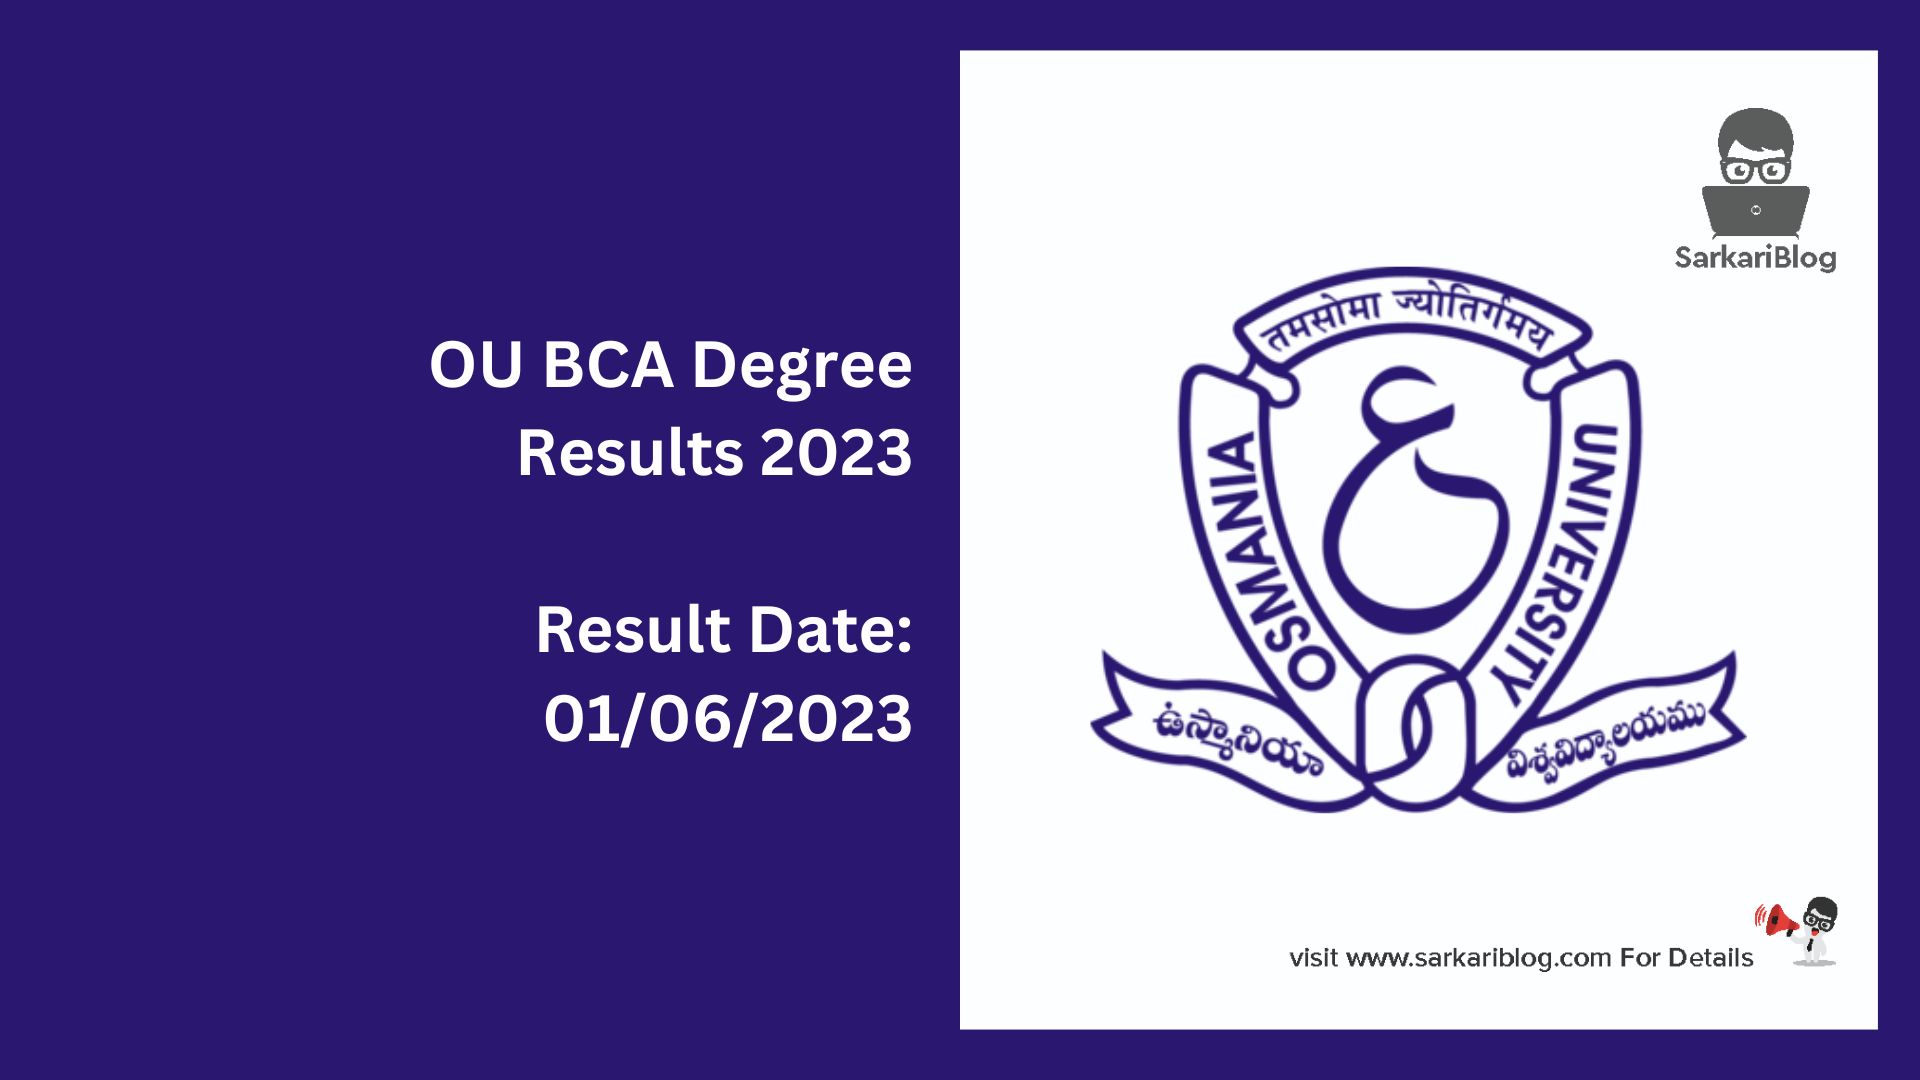 OU BCA Degree Results 2023